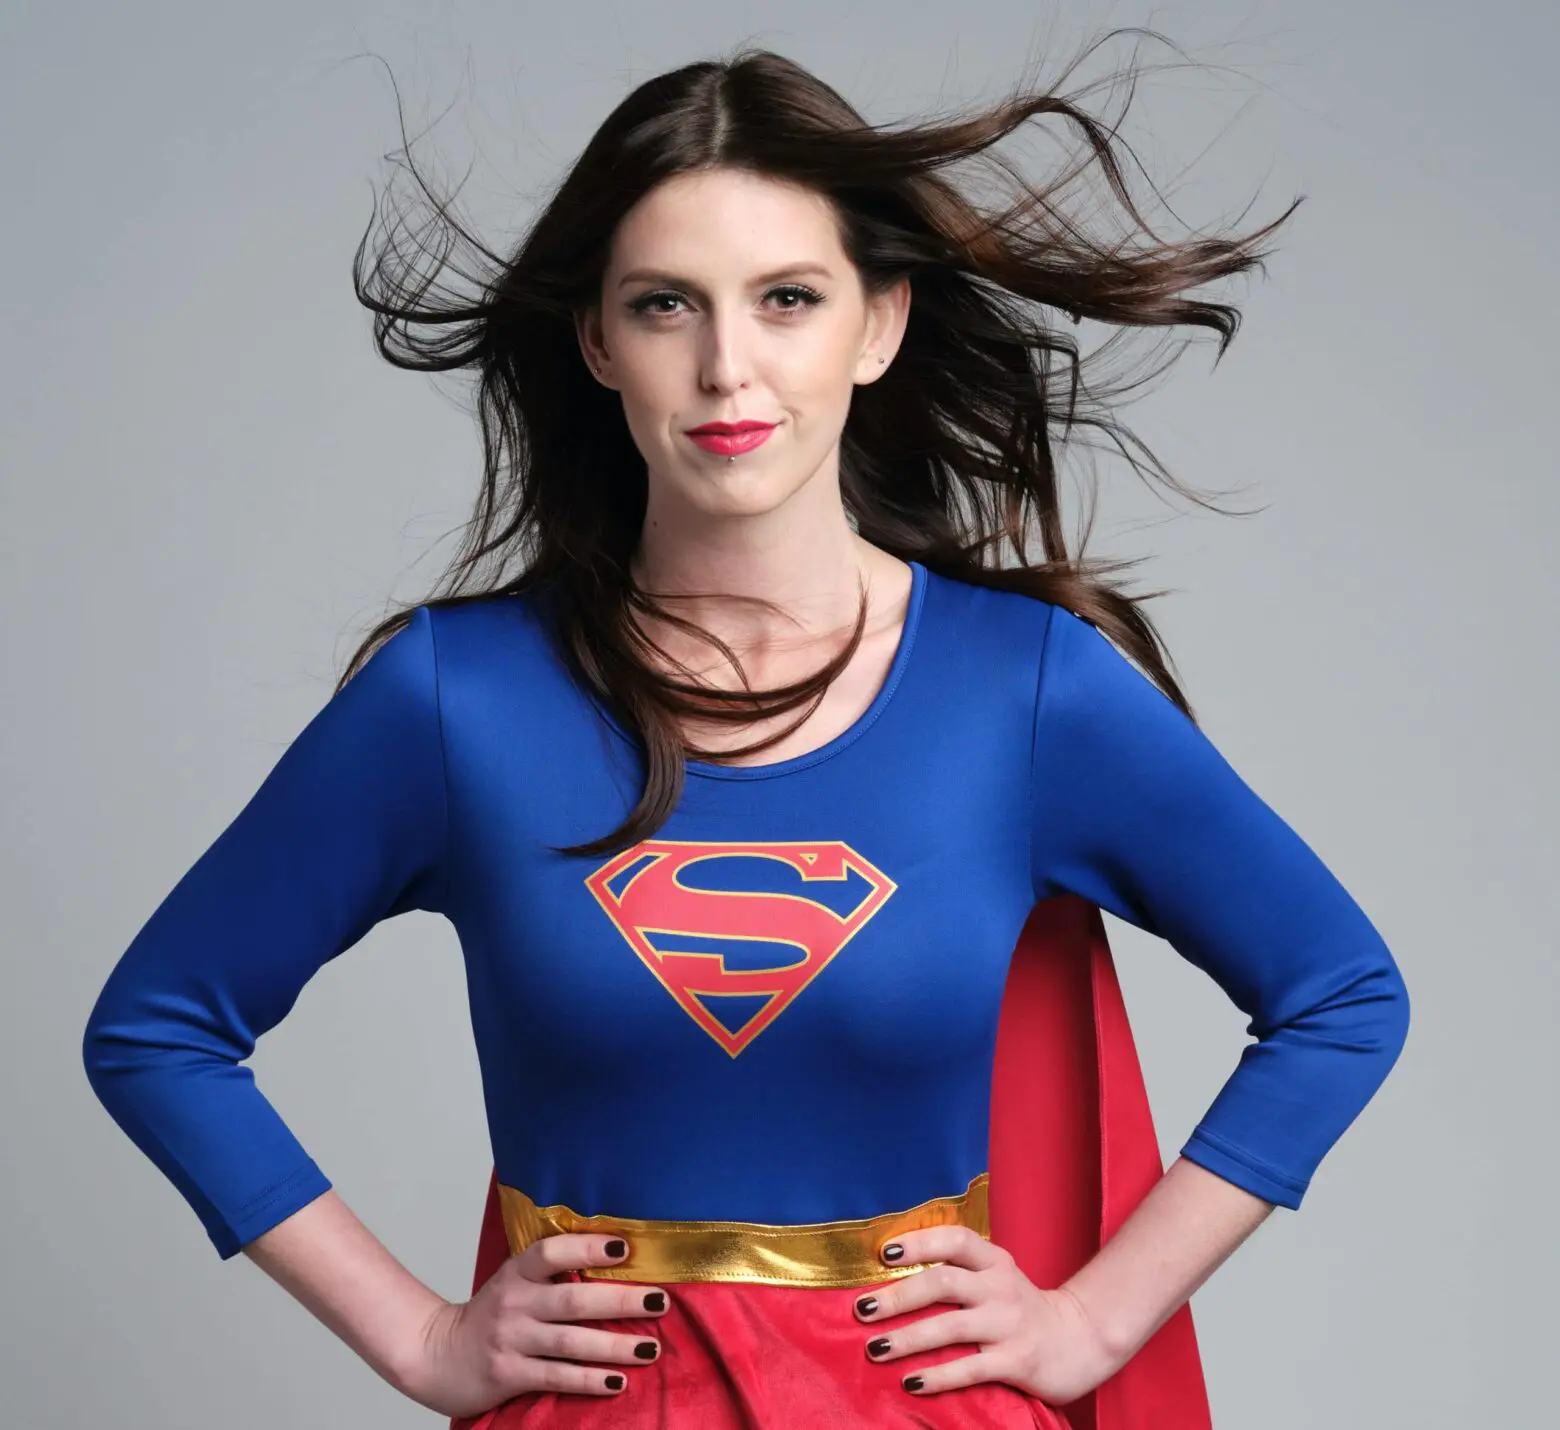 Megan as a superhero